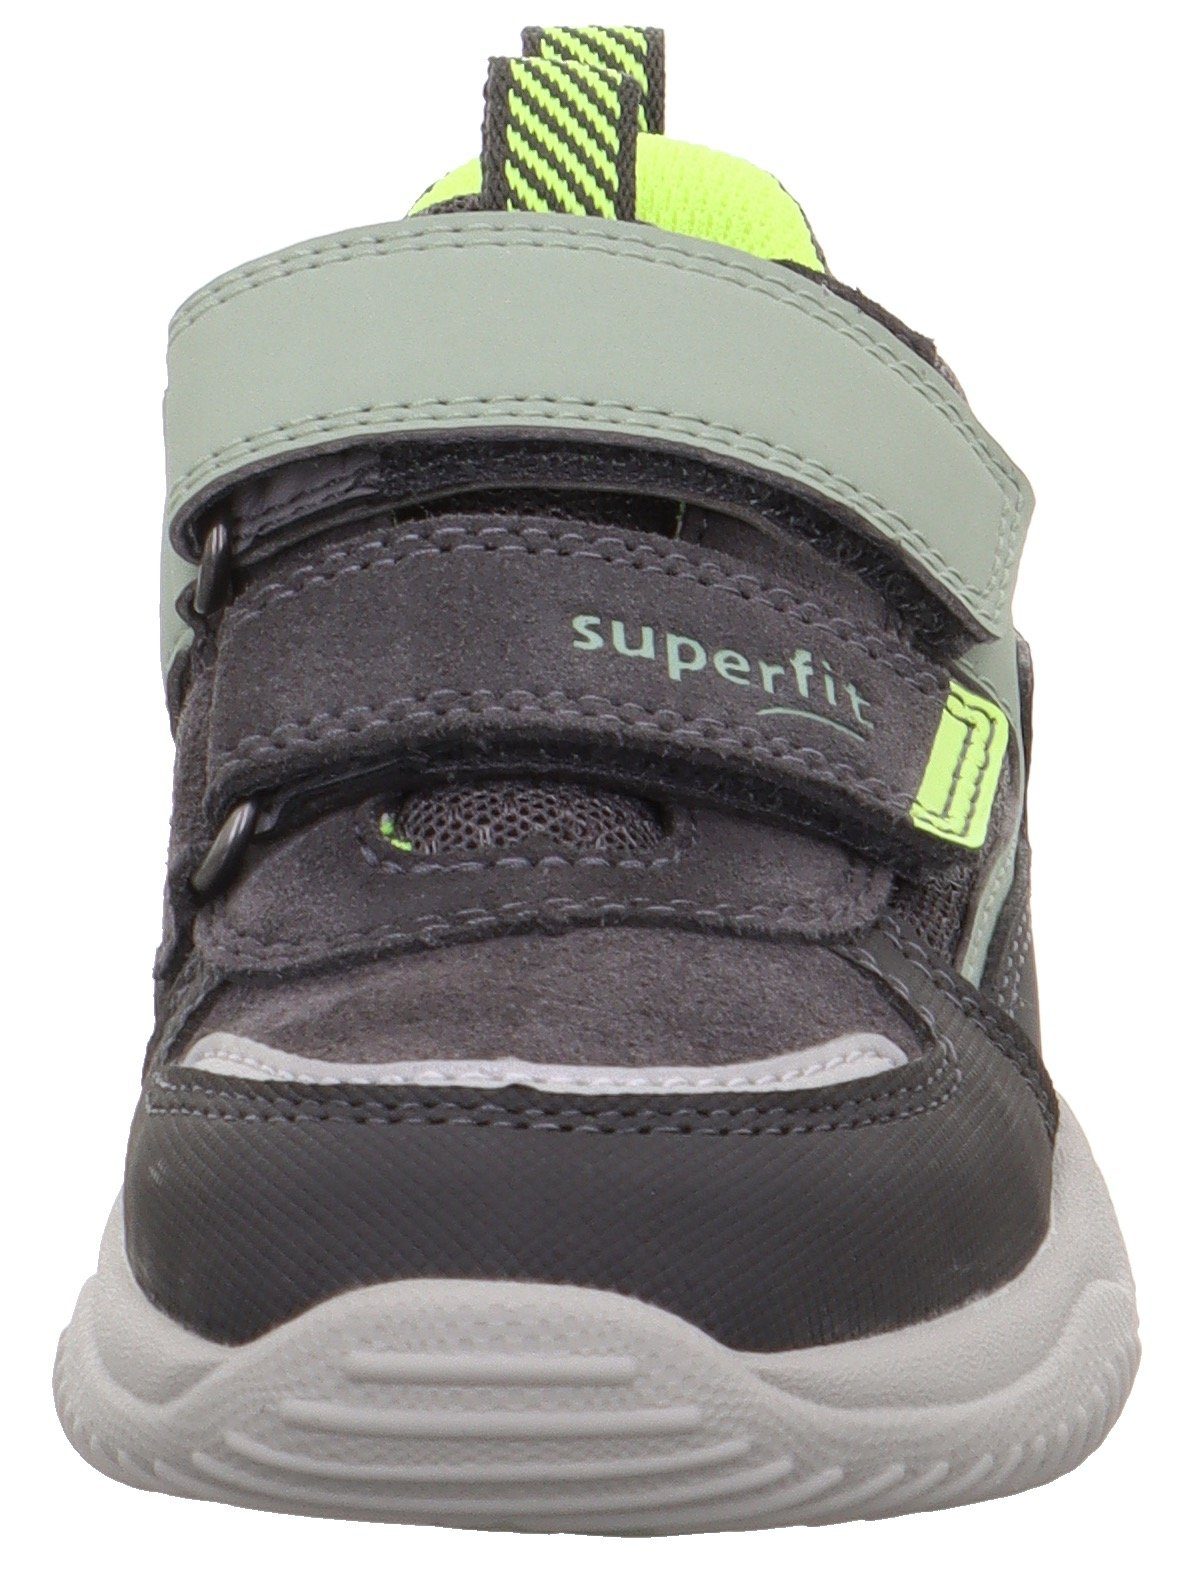 Superfit STORM WMS: Mittel Sneaker im (Packung) Materialmix